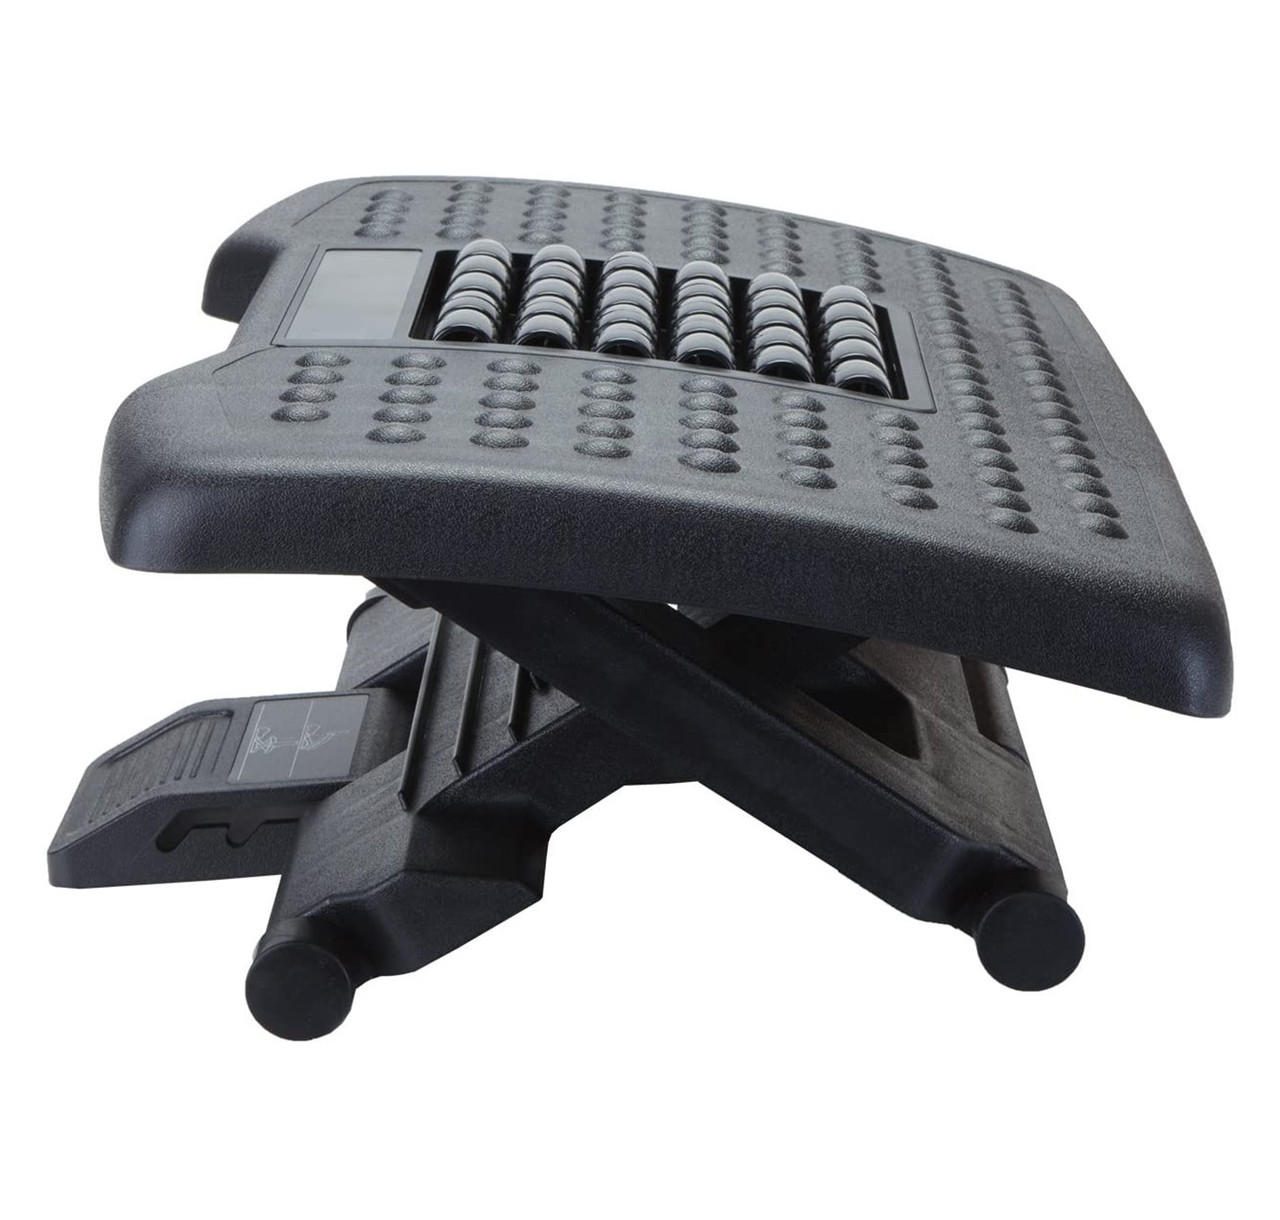 Premium Height Adjustable Footrest with Rollers : Kantek Inc.